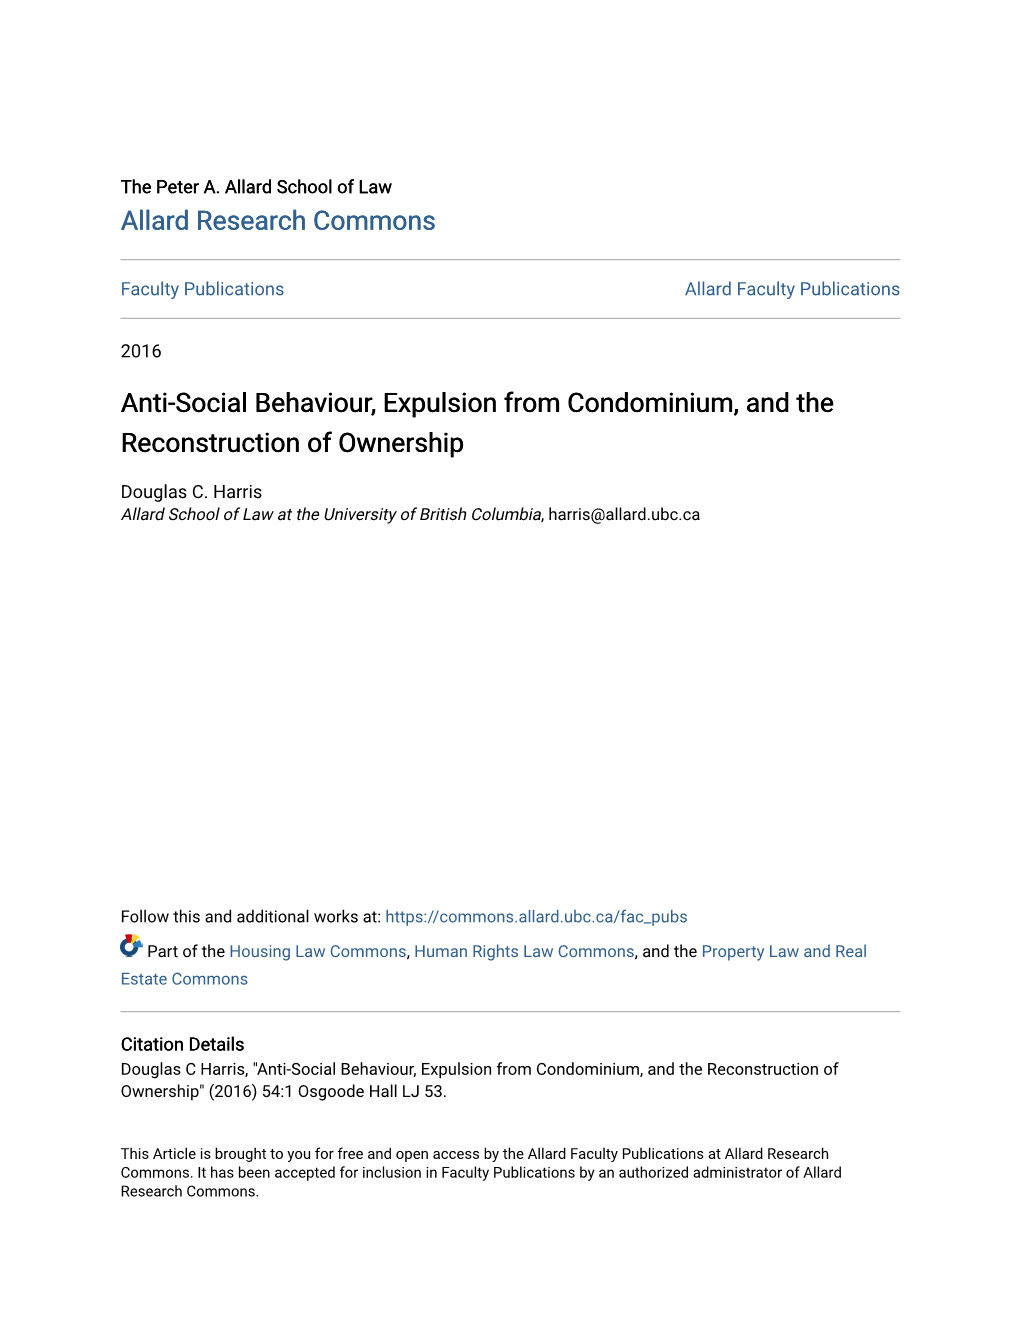 Anti-Social Behaviour, Expulsion from Condominium, and the Reconstruction of Ownership